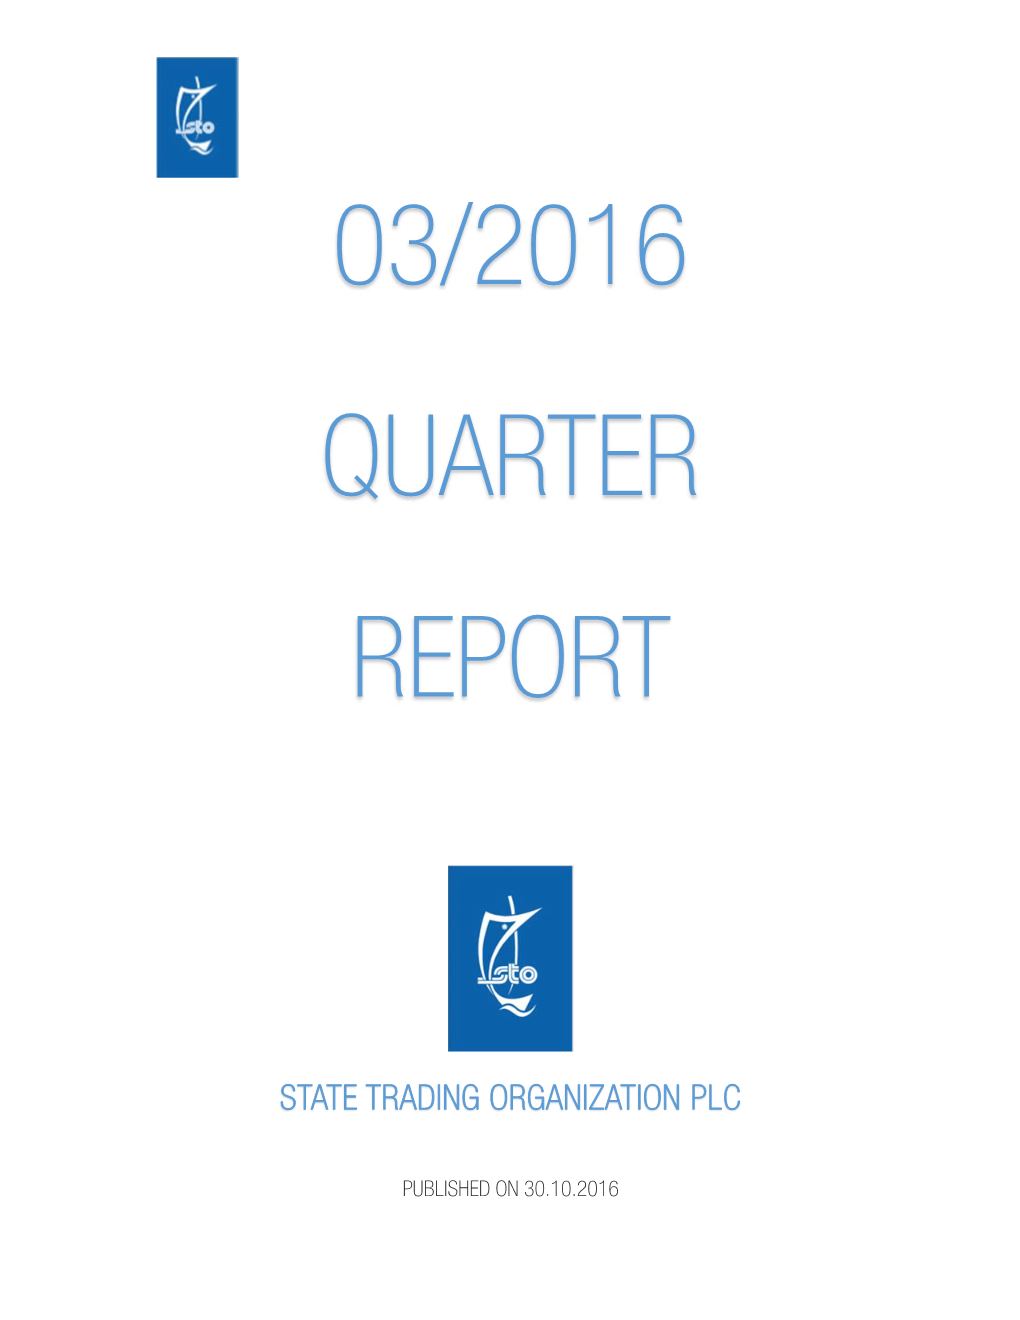 Quarterly Report for Quarter 3 of Year 2016